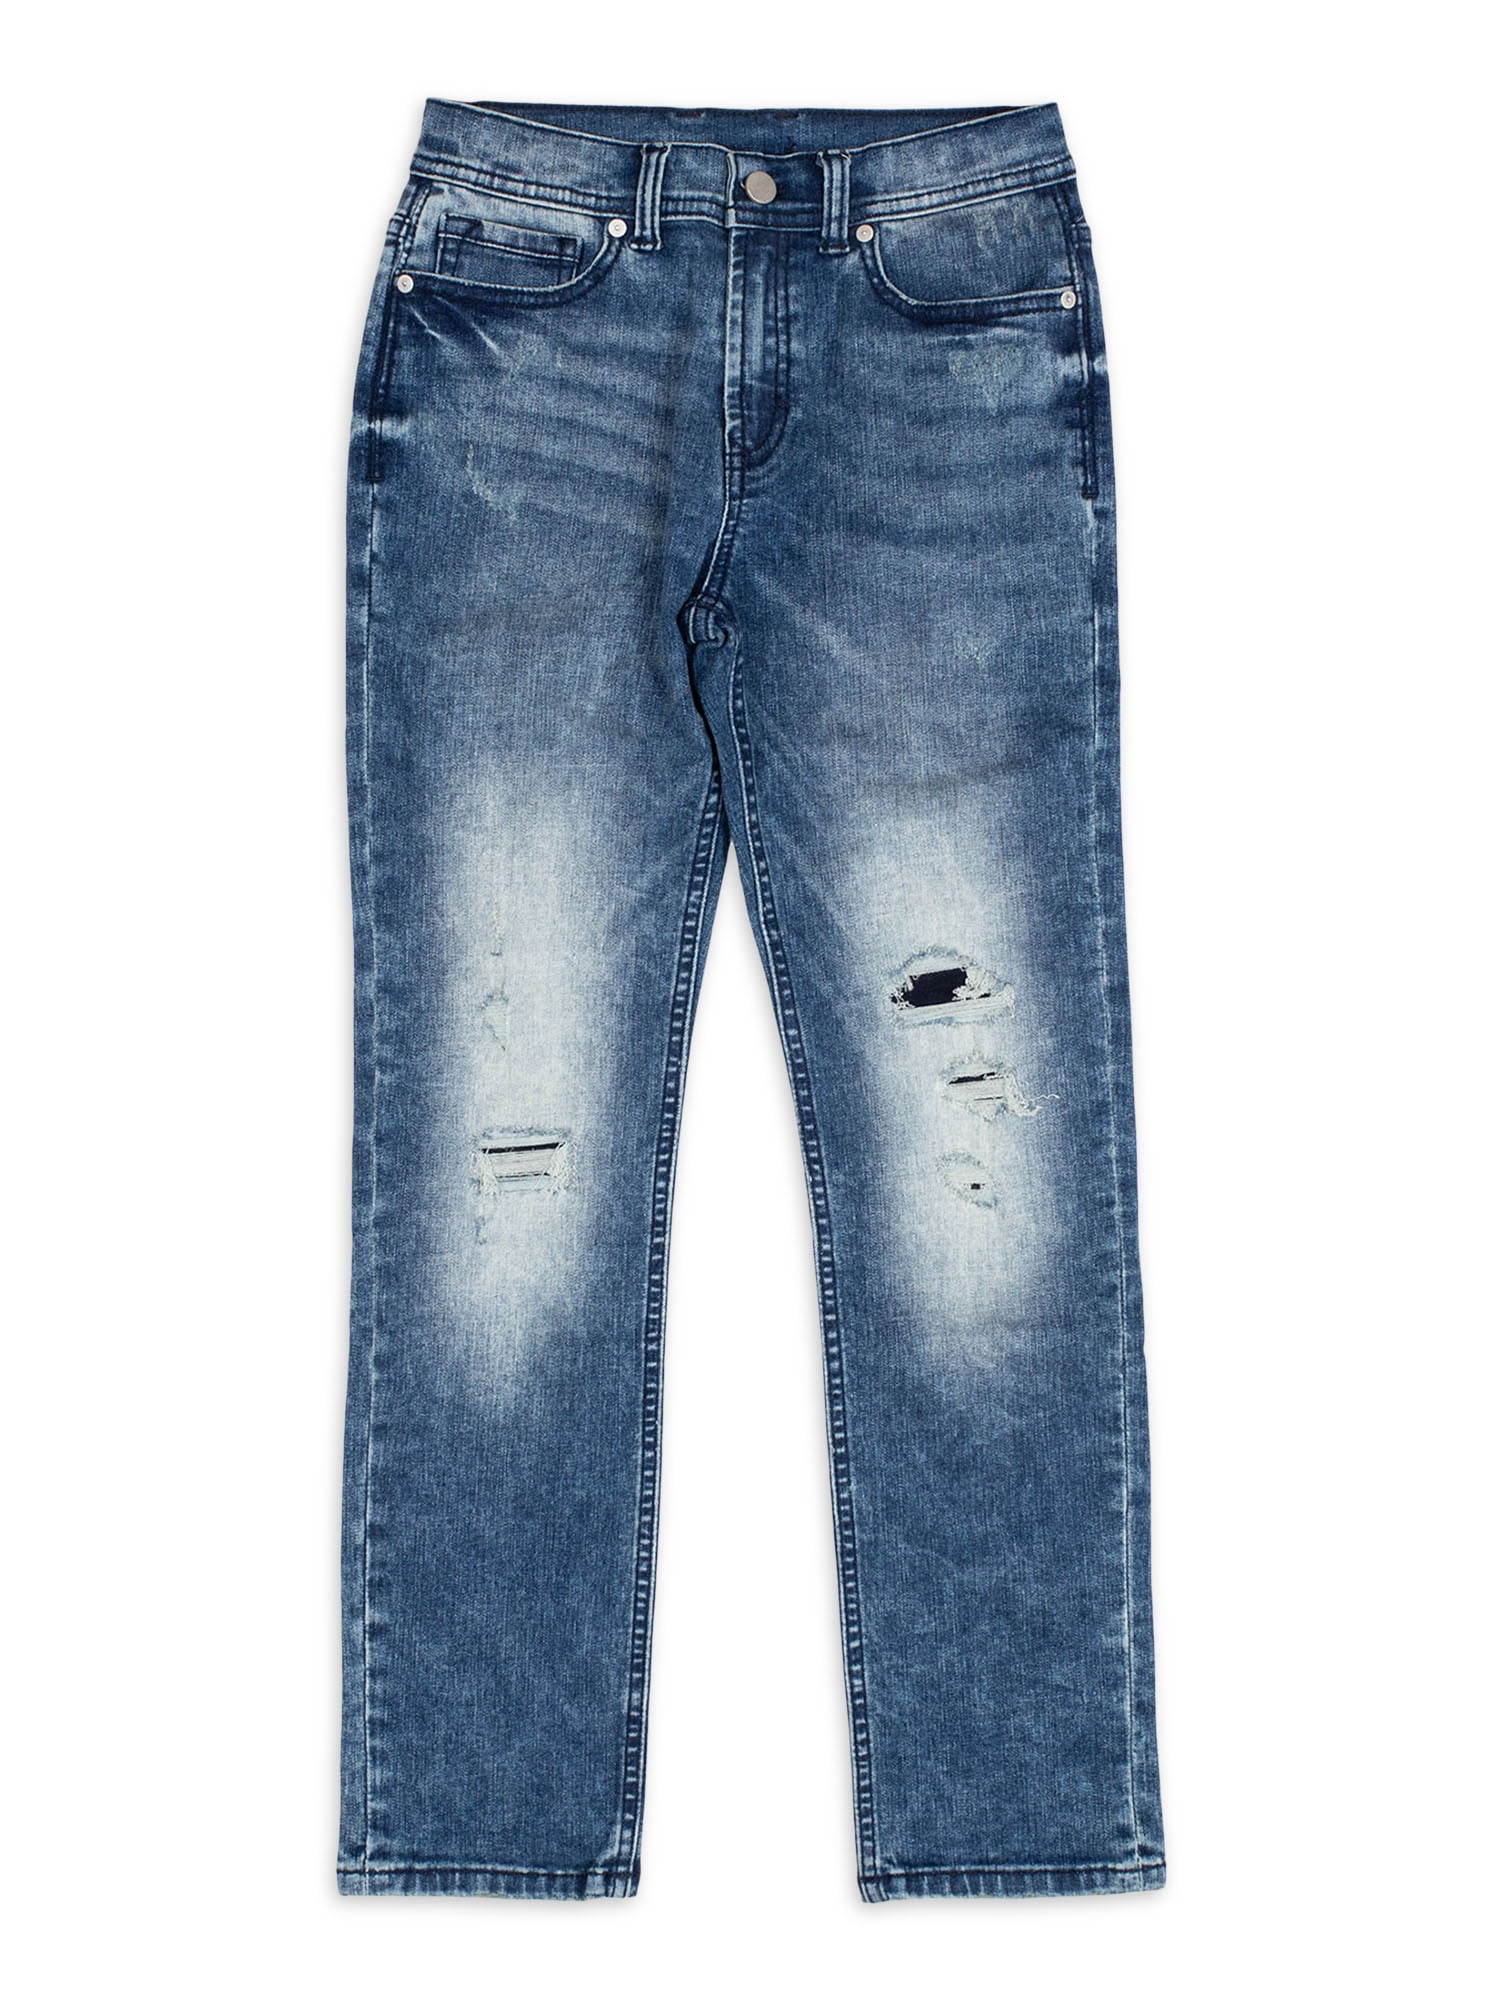 Wonder Nation Boys Rip and Repair Jeans, Sizes 4-18 & Husky - Walmart.com